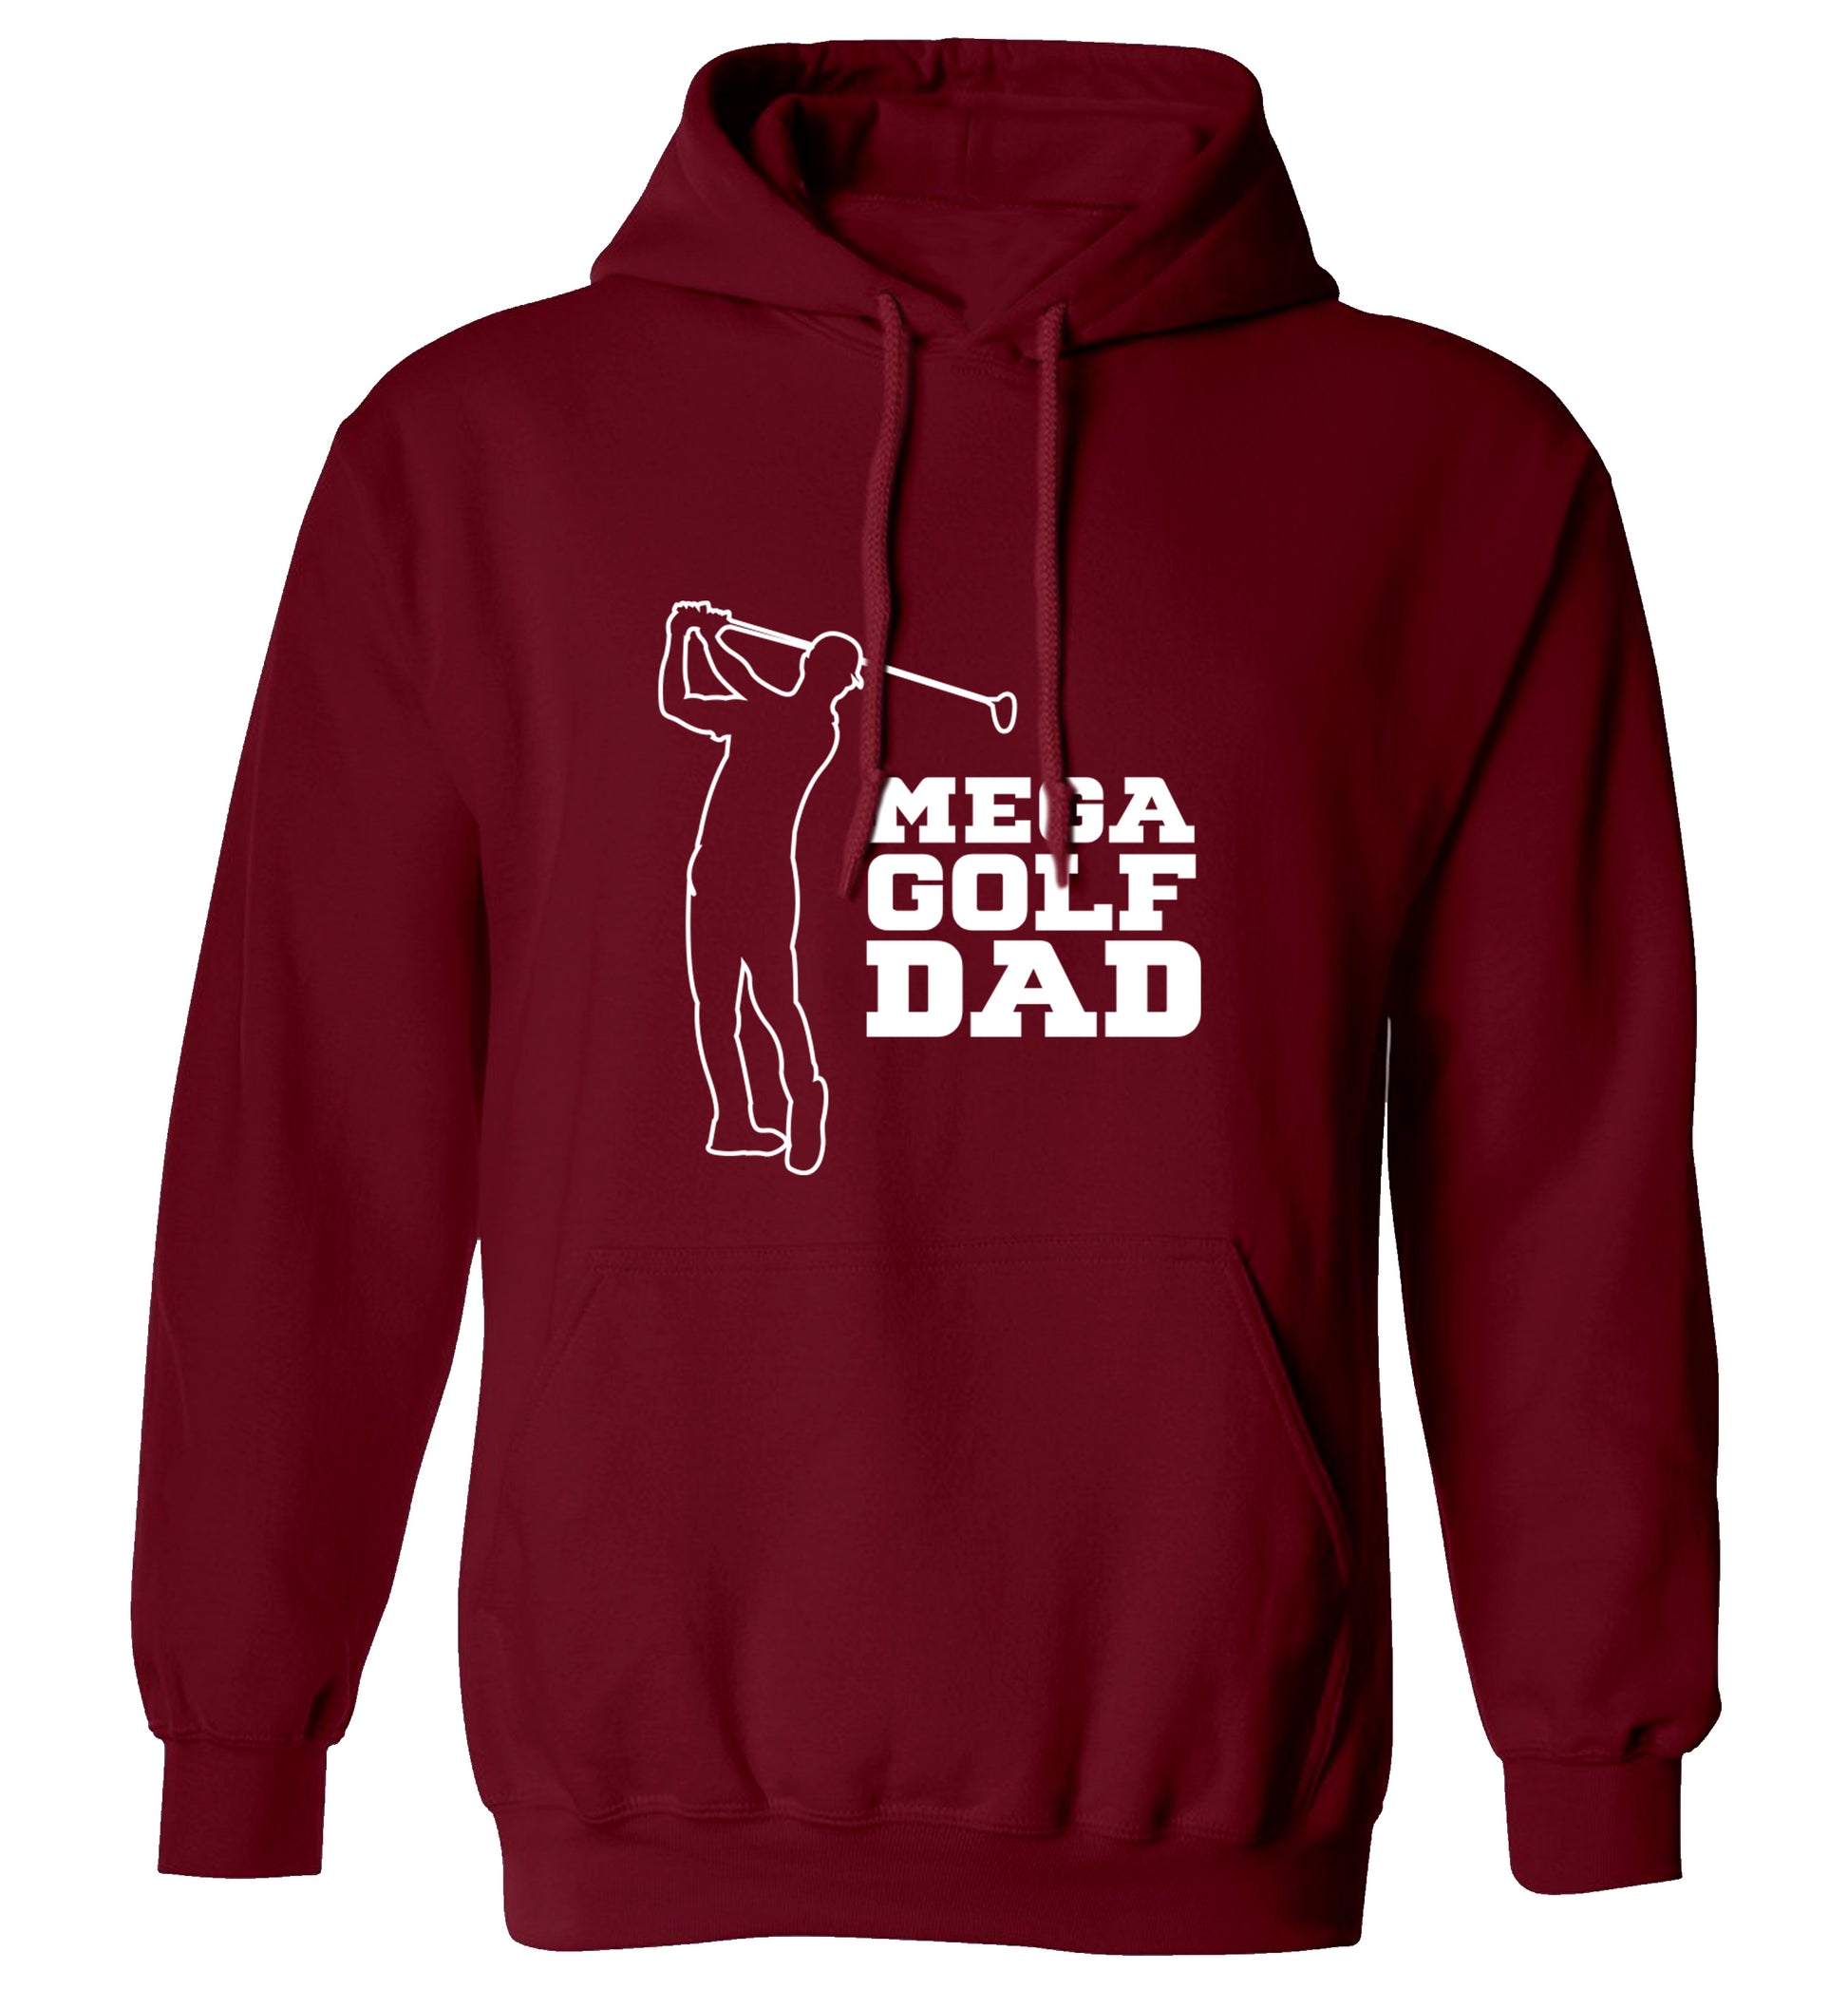 Mega golfing dad adults unisex maroon hoodie 2XL